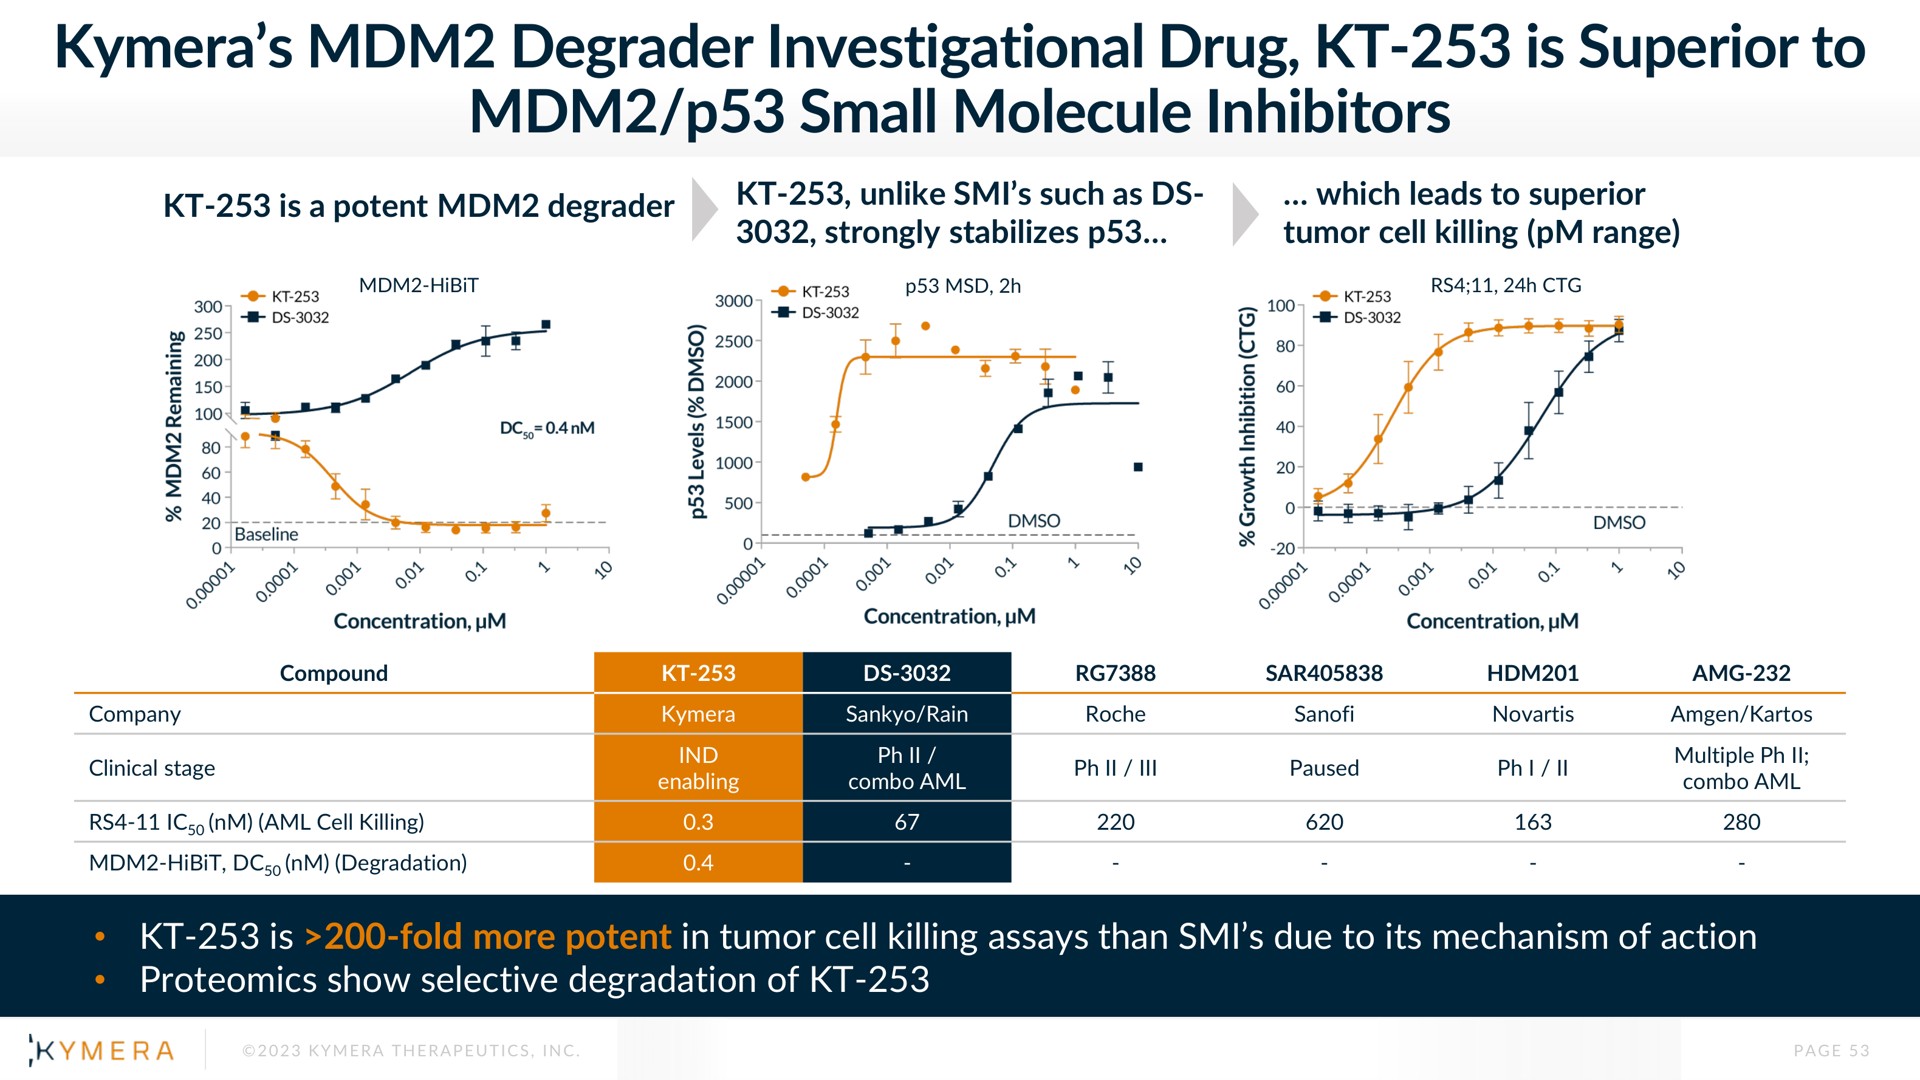 degrader investigational drug is superior to small molecule inhibitors | Kymera